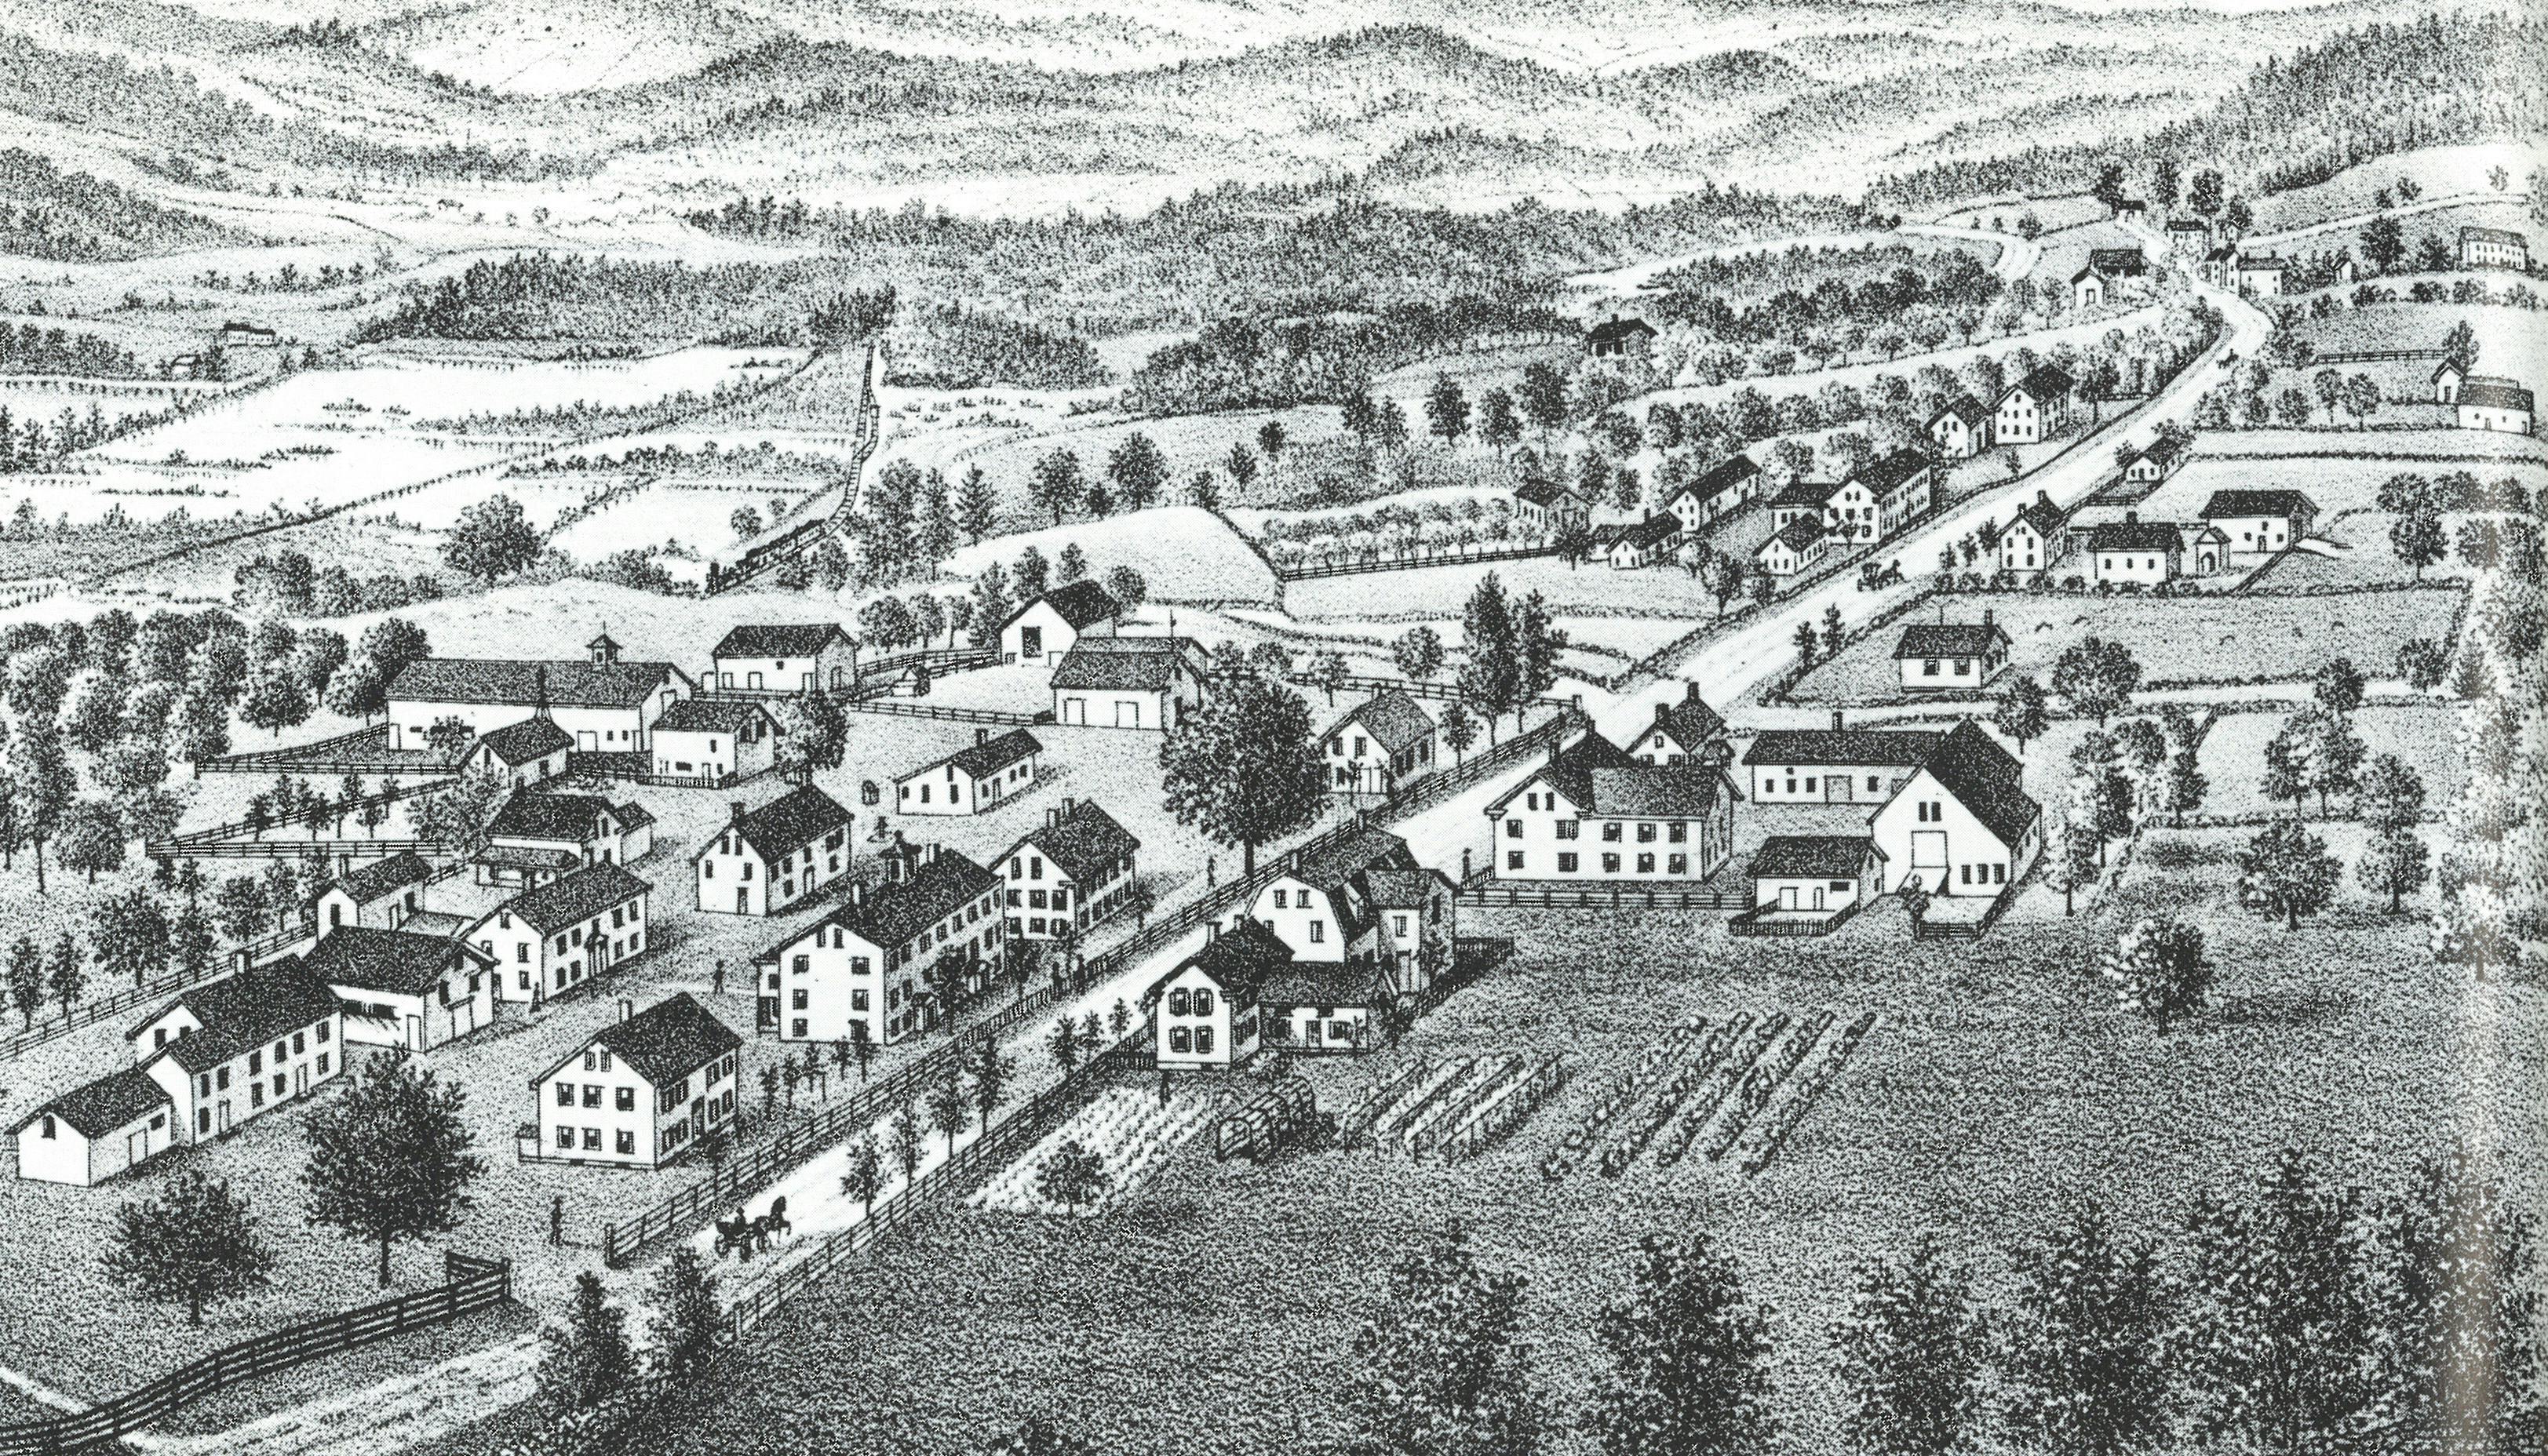 Illustration of Alfred Shaker Village, MI